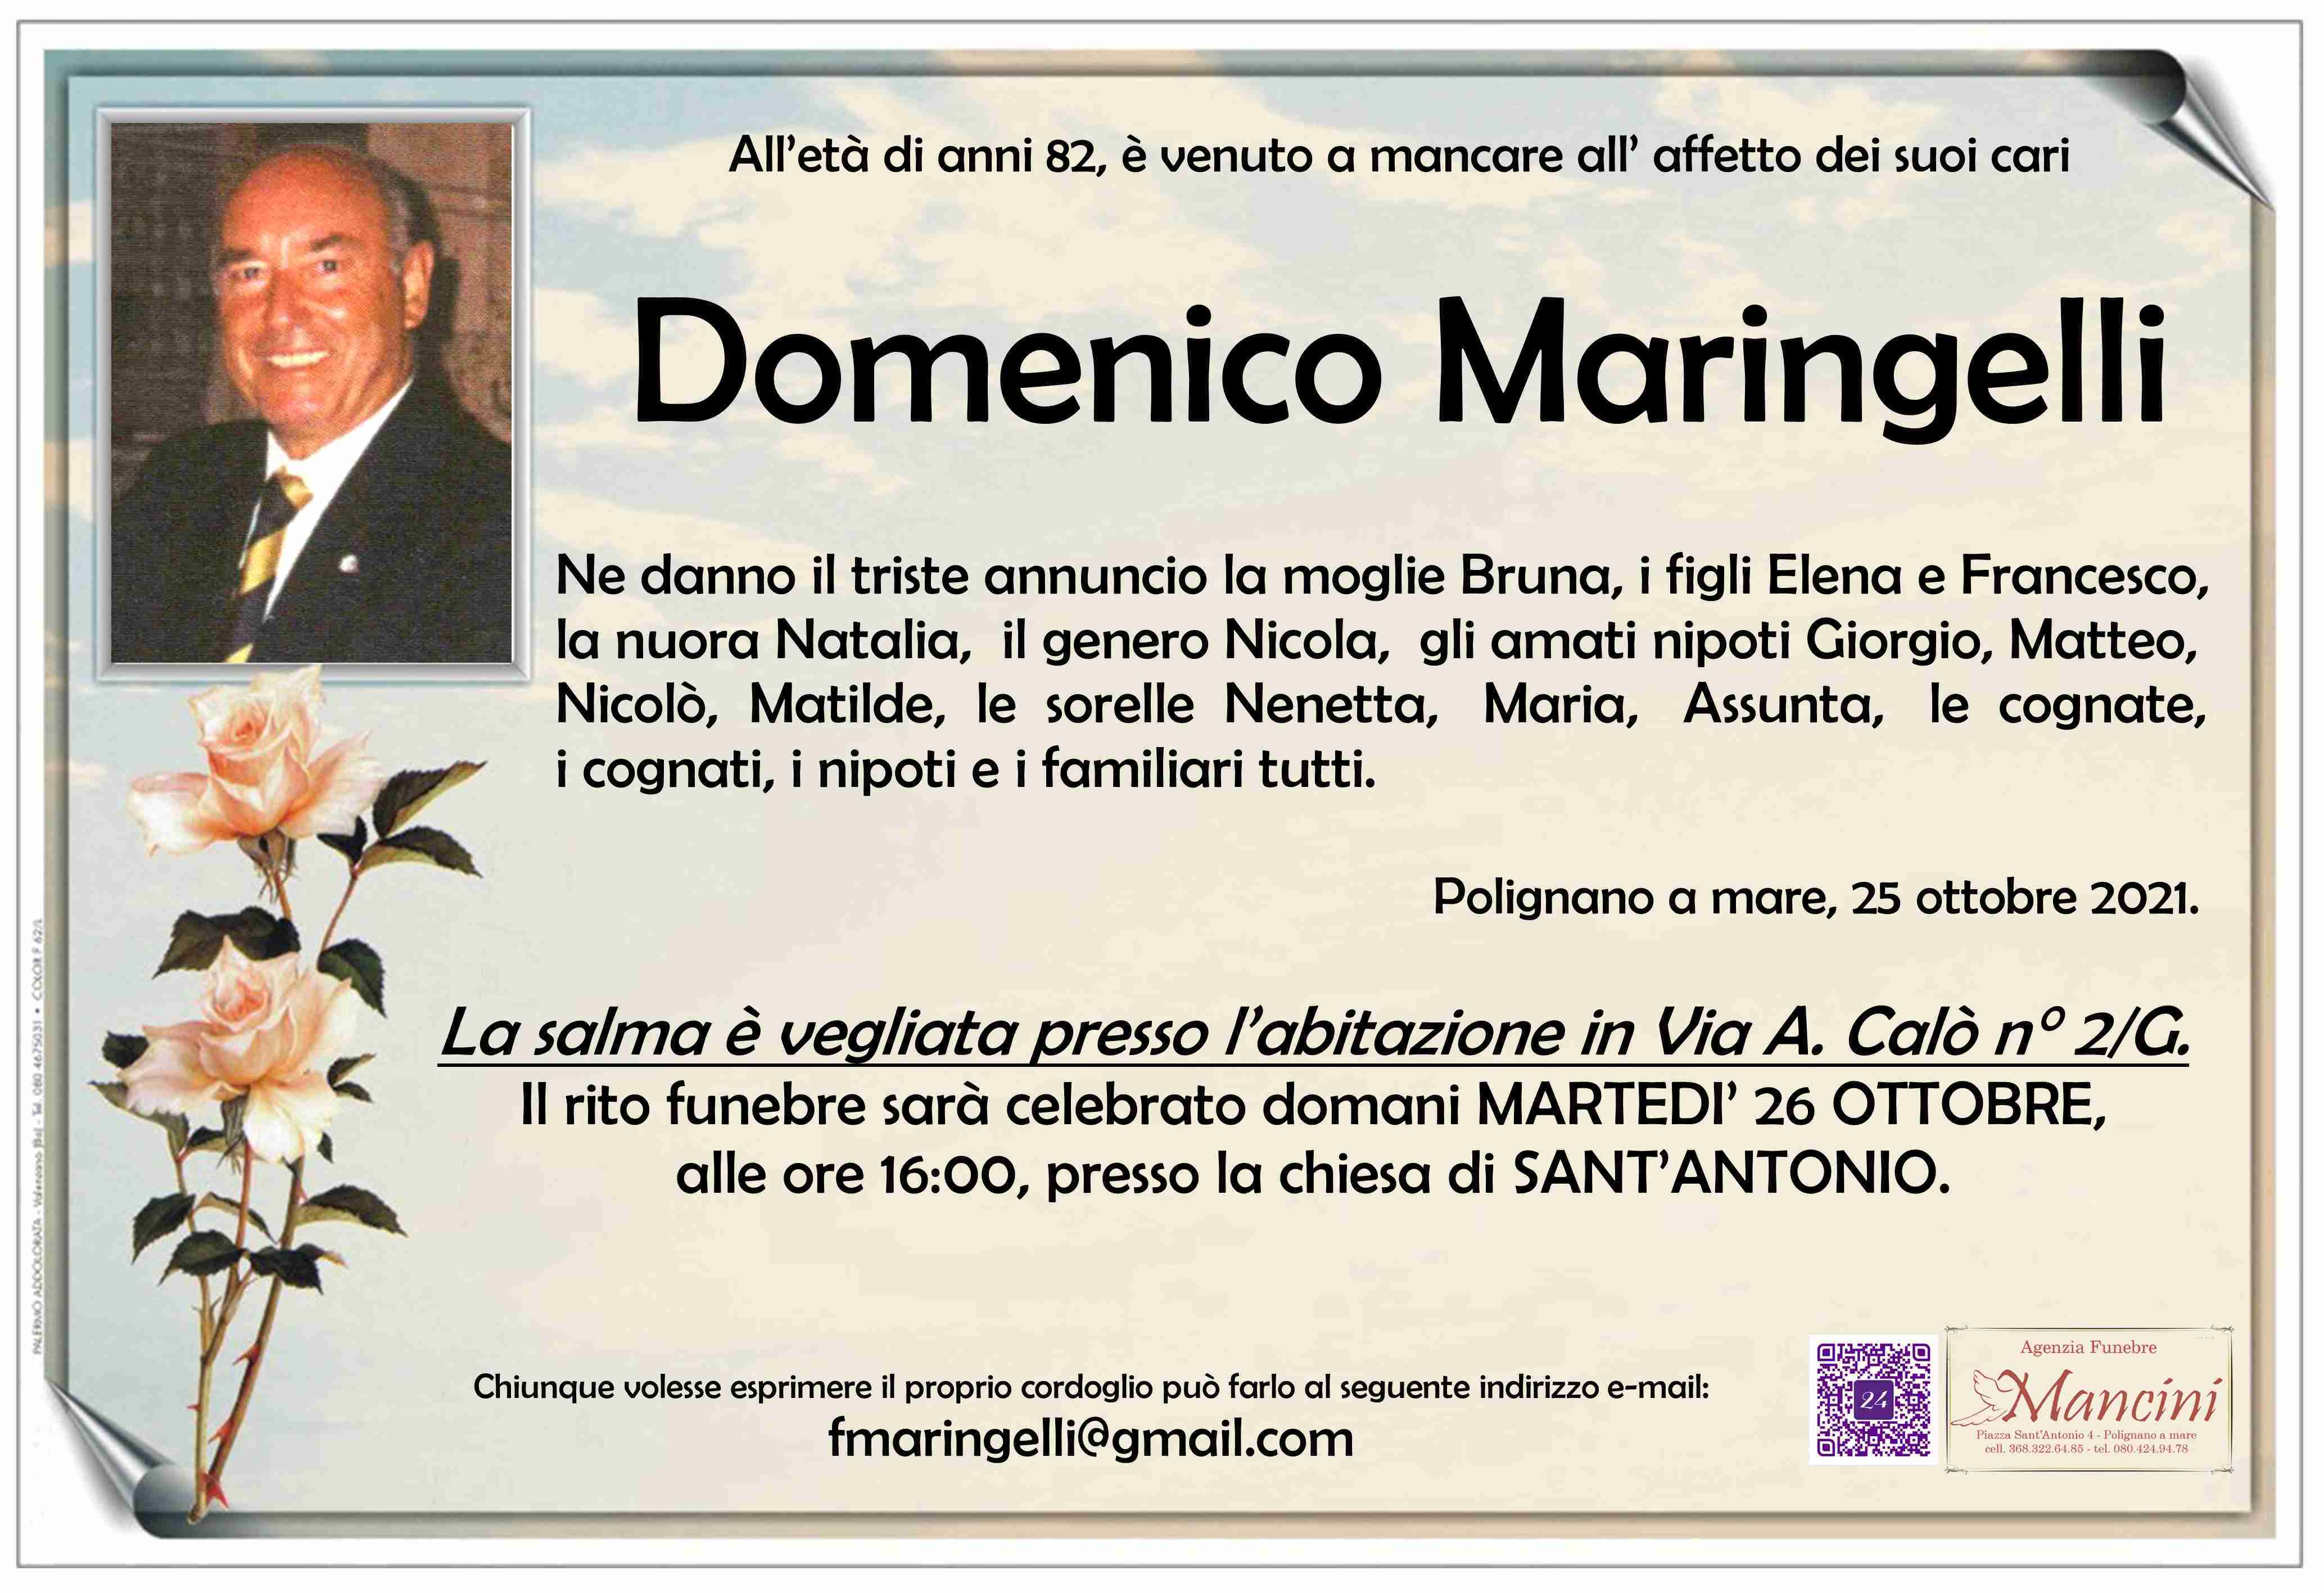 Domenico Maringelli